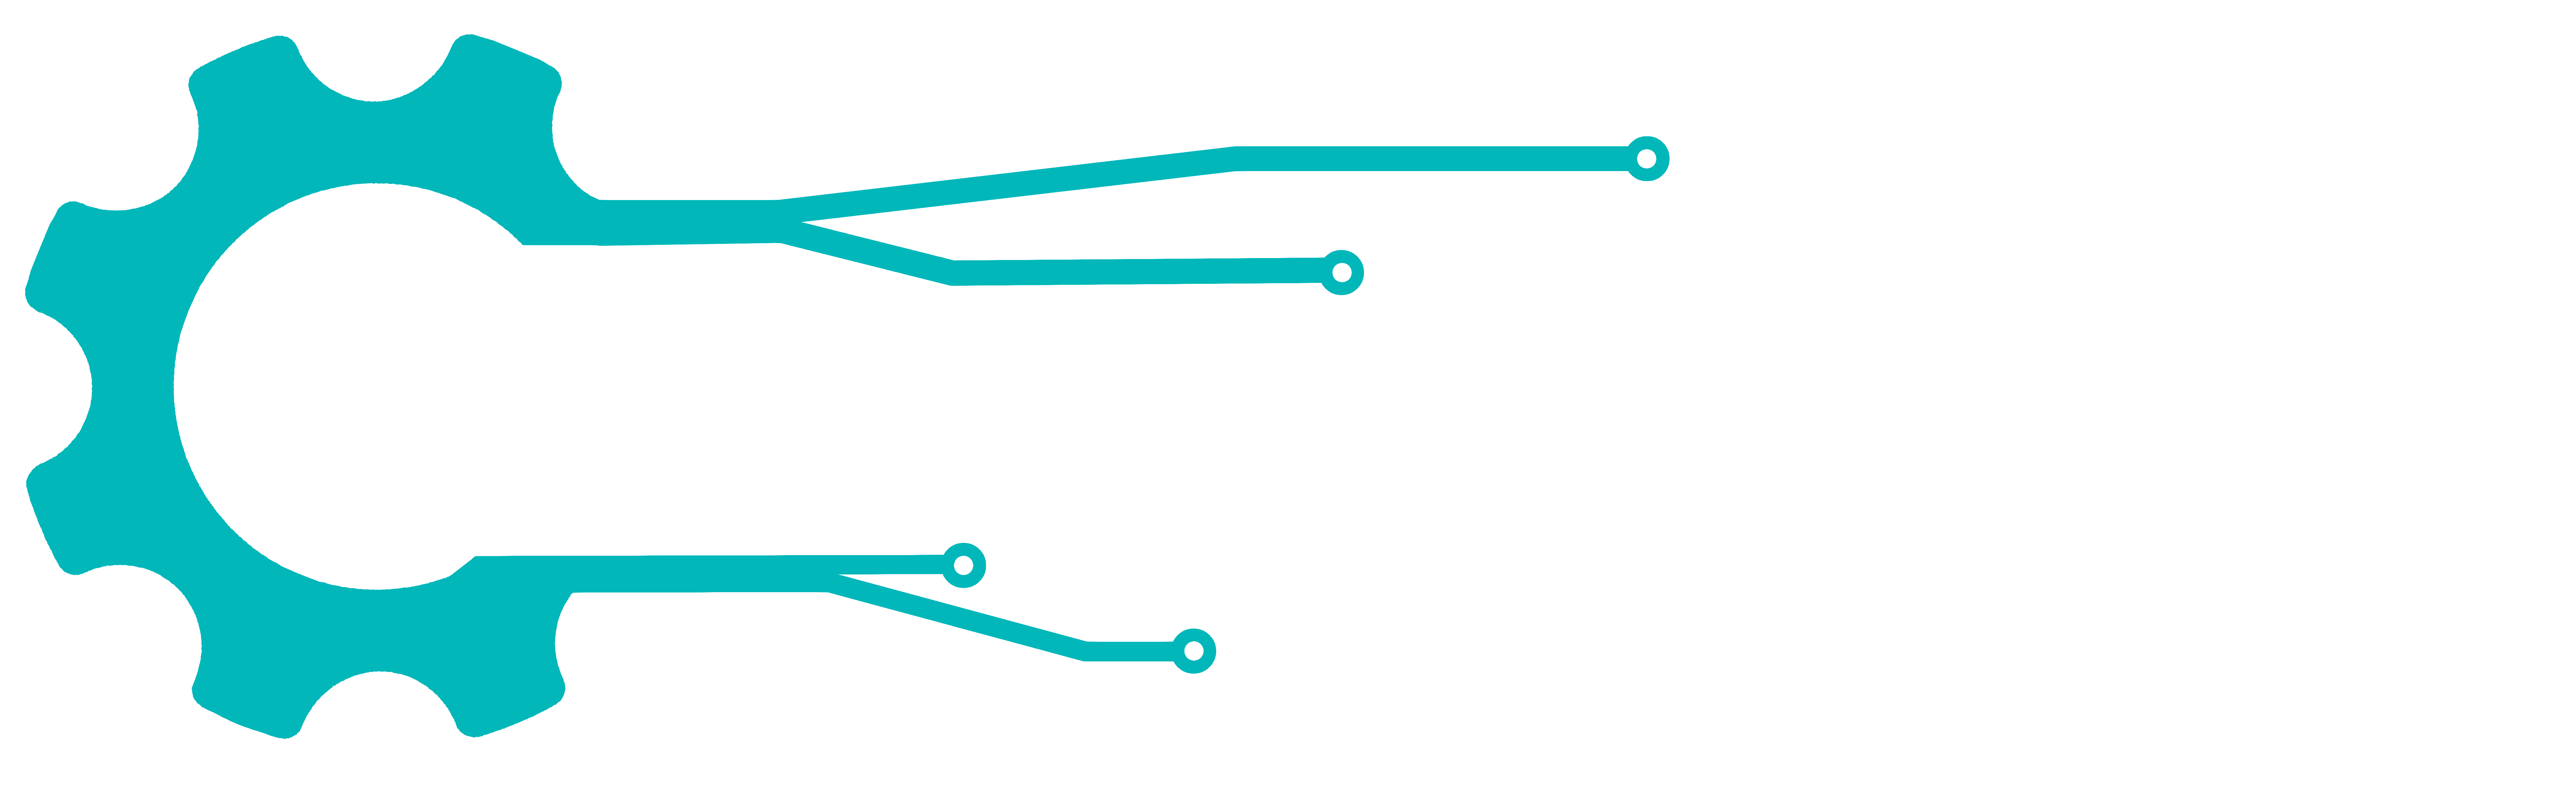 computerden consulting